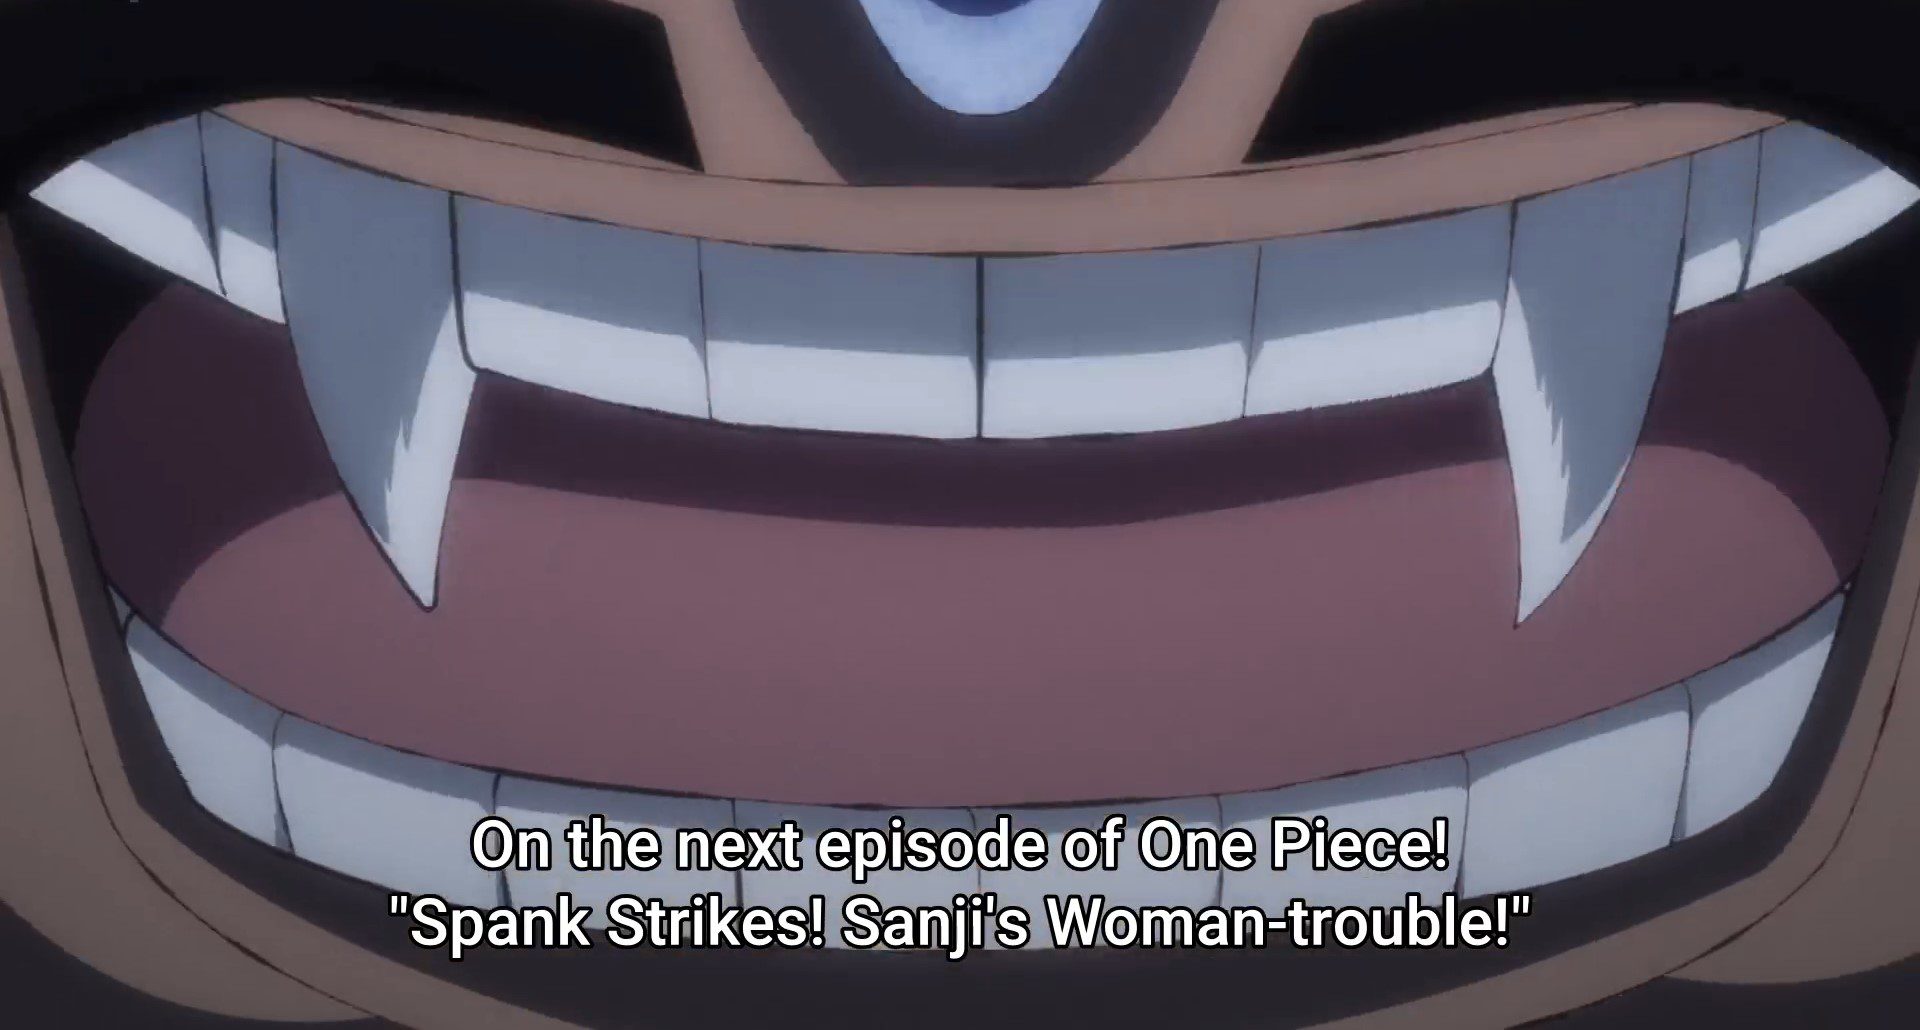 One Piece Episode 1021 recap: Kaido transforms, Robin thanks Sanji